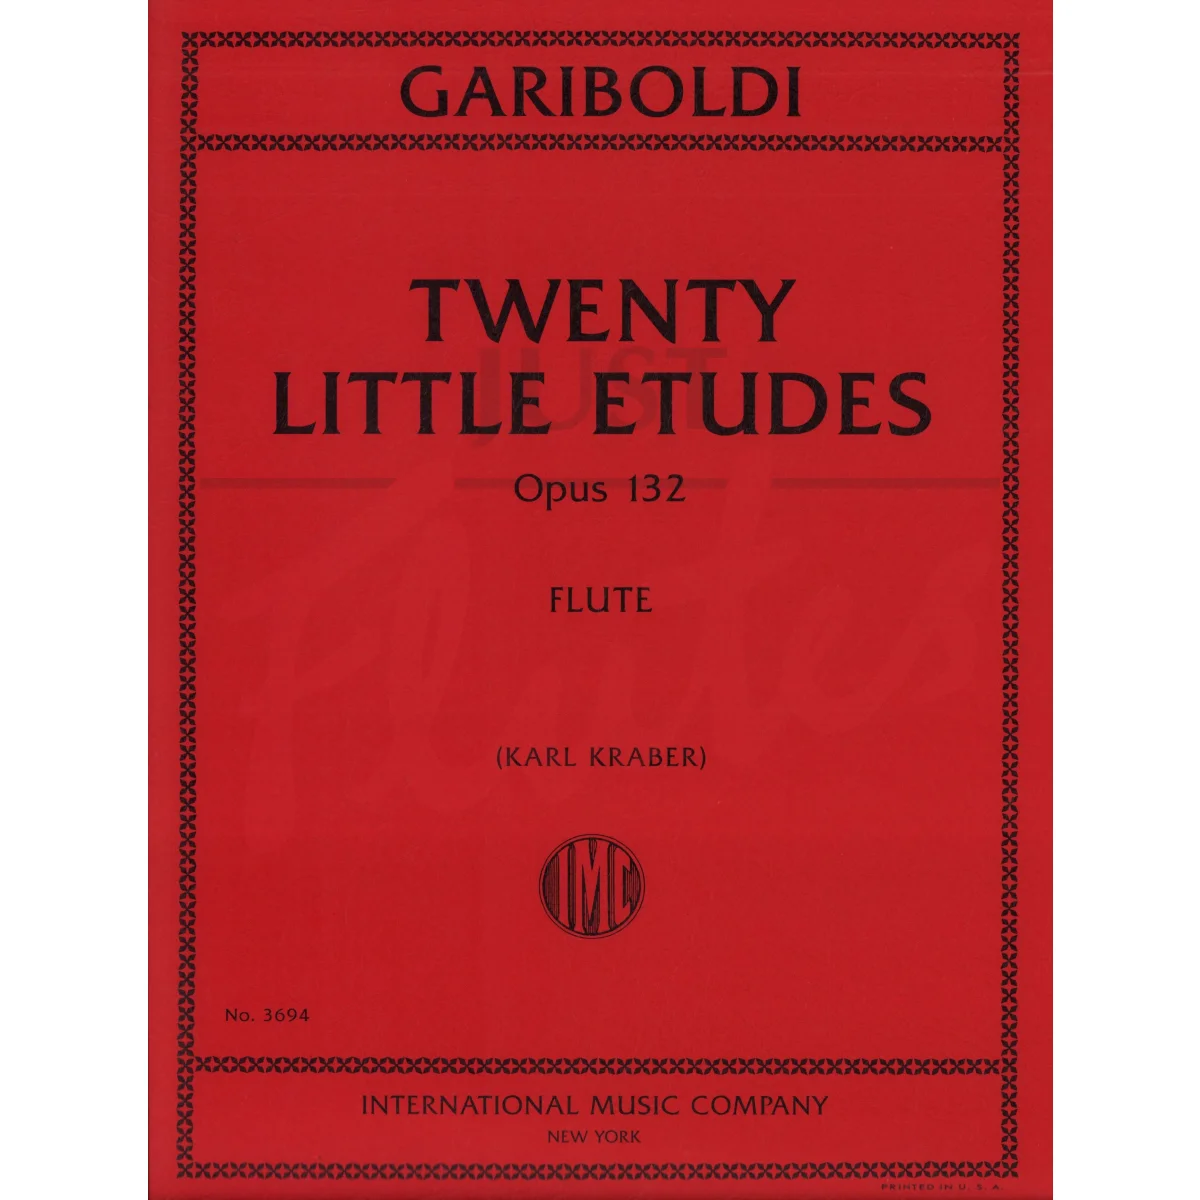 Twenty Little Etudes for Flute